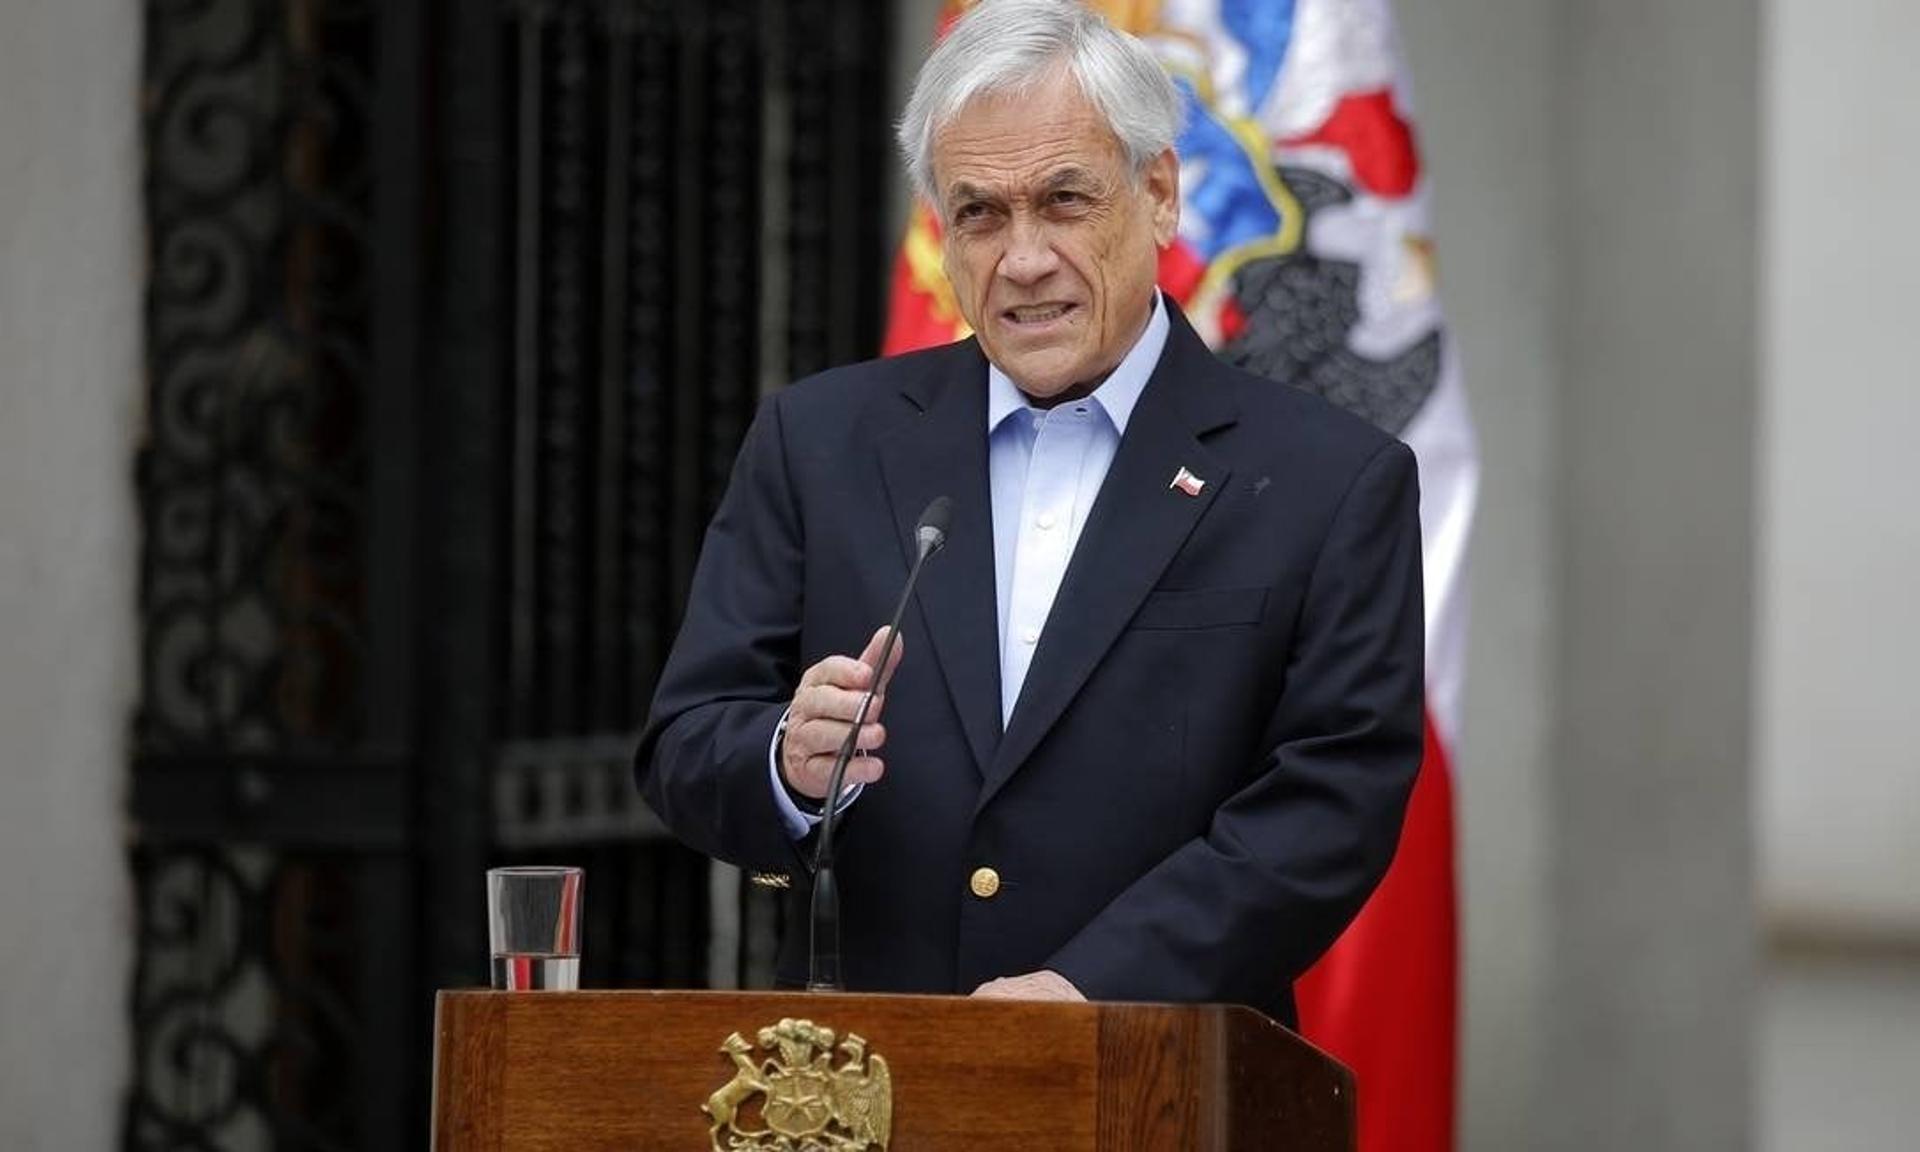 Sebastian Piñera